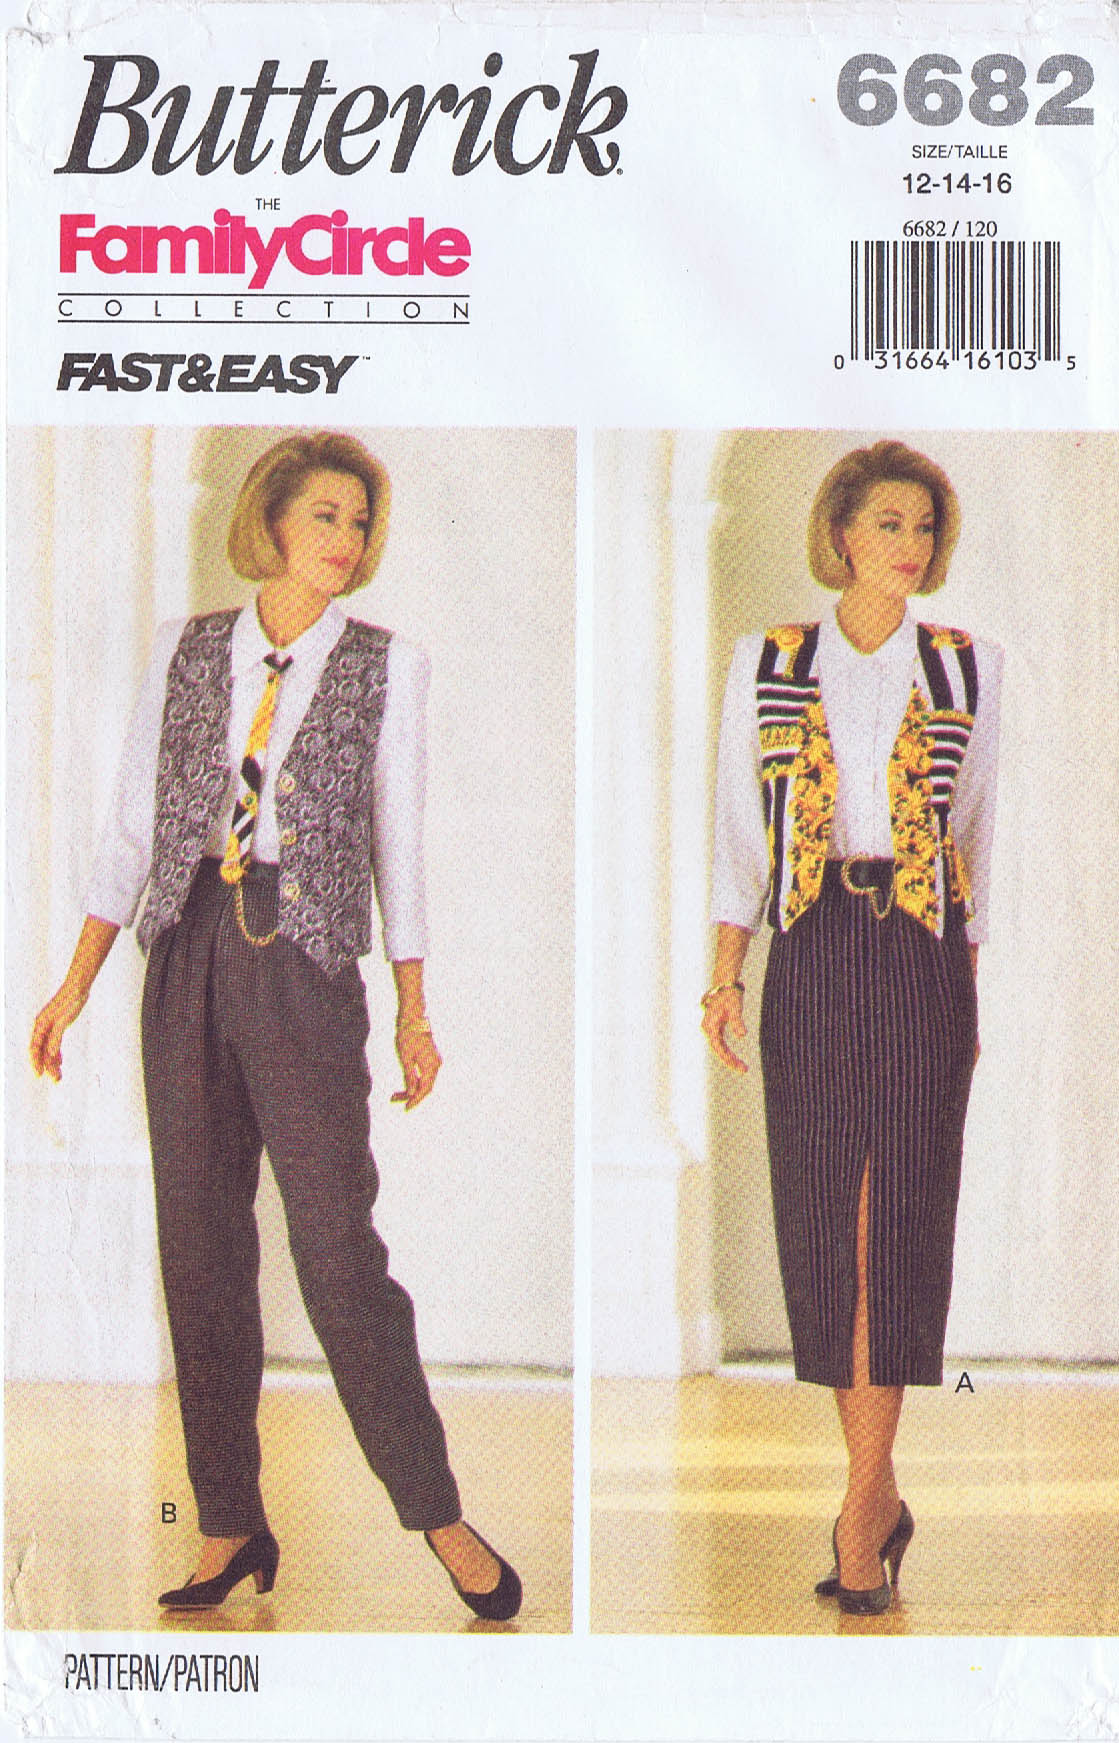 UNCUT Pants Vest Tie Sizes 12-14-16 Misses Fast /& Easy Wardrobe Shirt Vintage 1993 Butterick Pattern 6682 Skirt FF